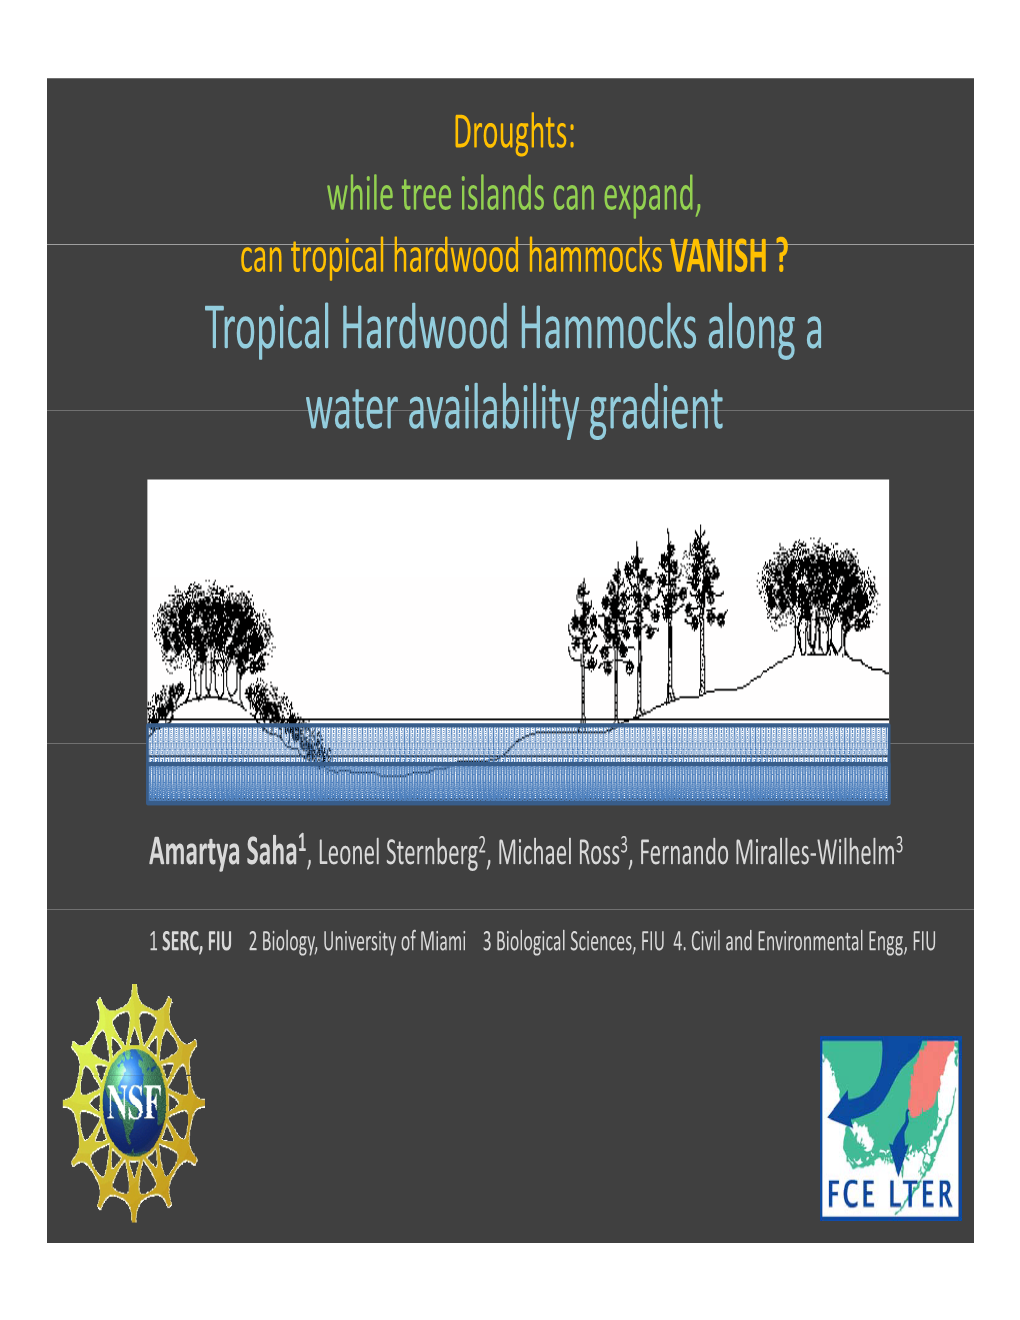 Tropical Hardwood Hammocks Along a Water Availability Gradient